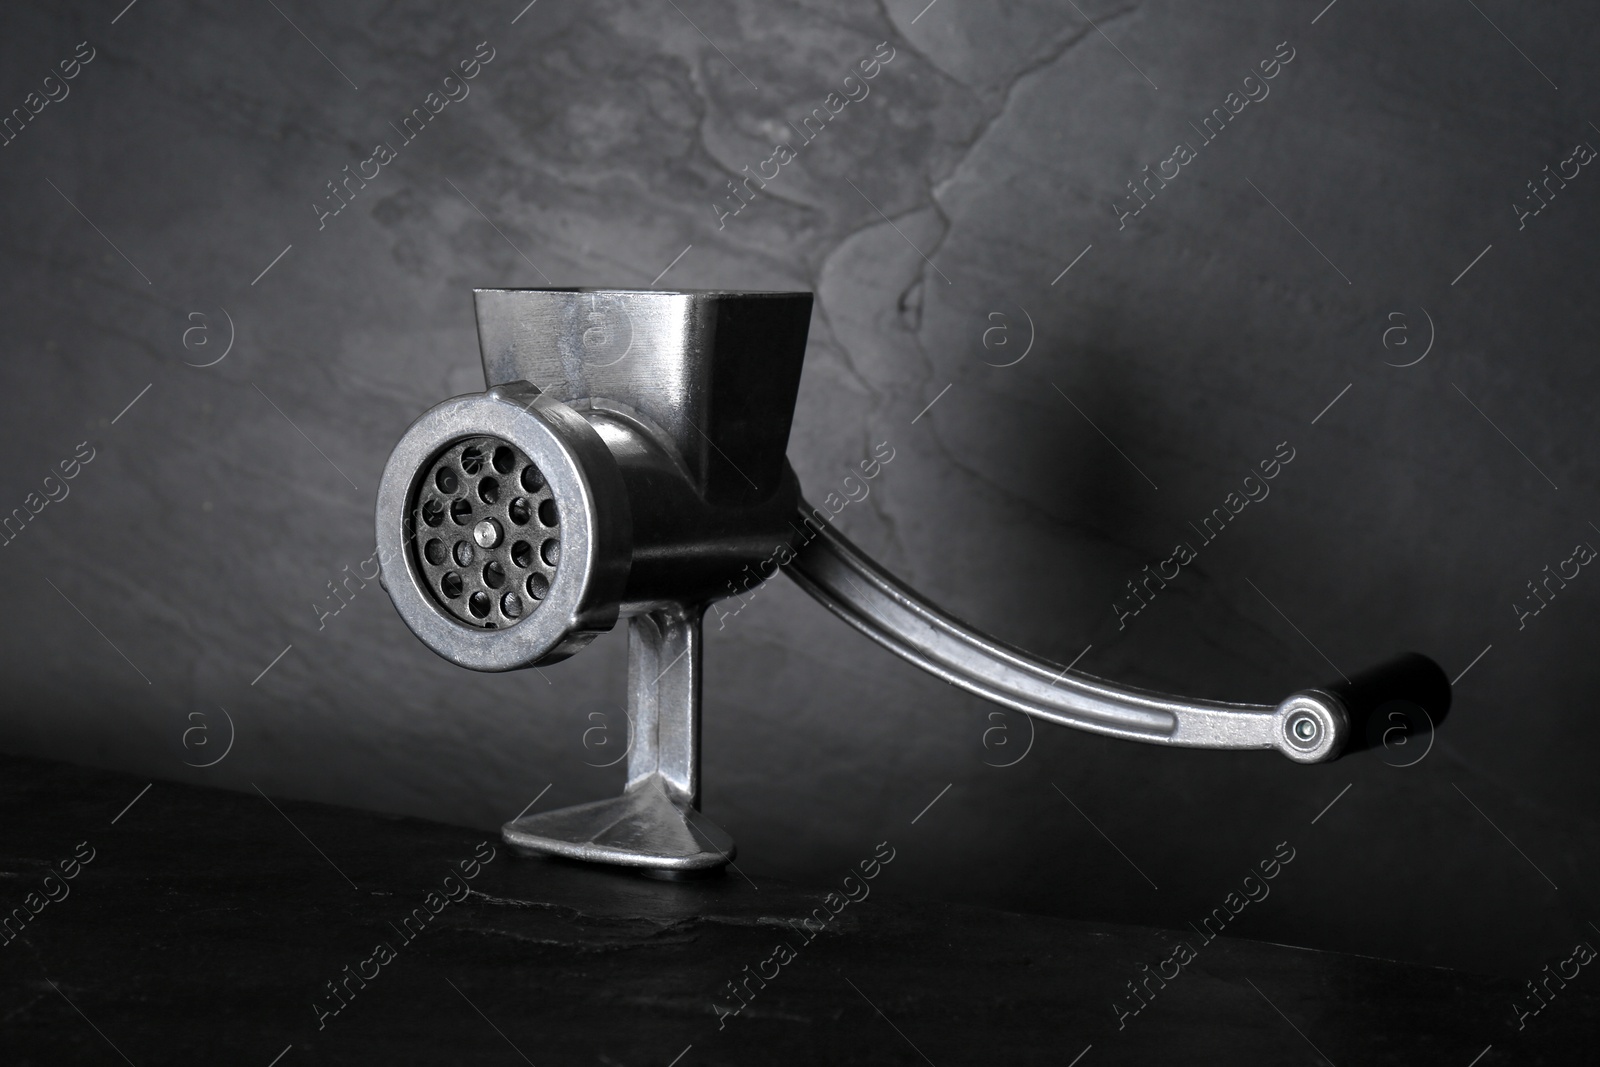 Photo of Metal manual meat grinder on dark table against black background